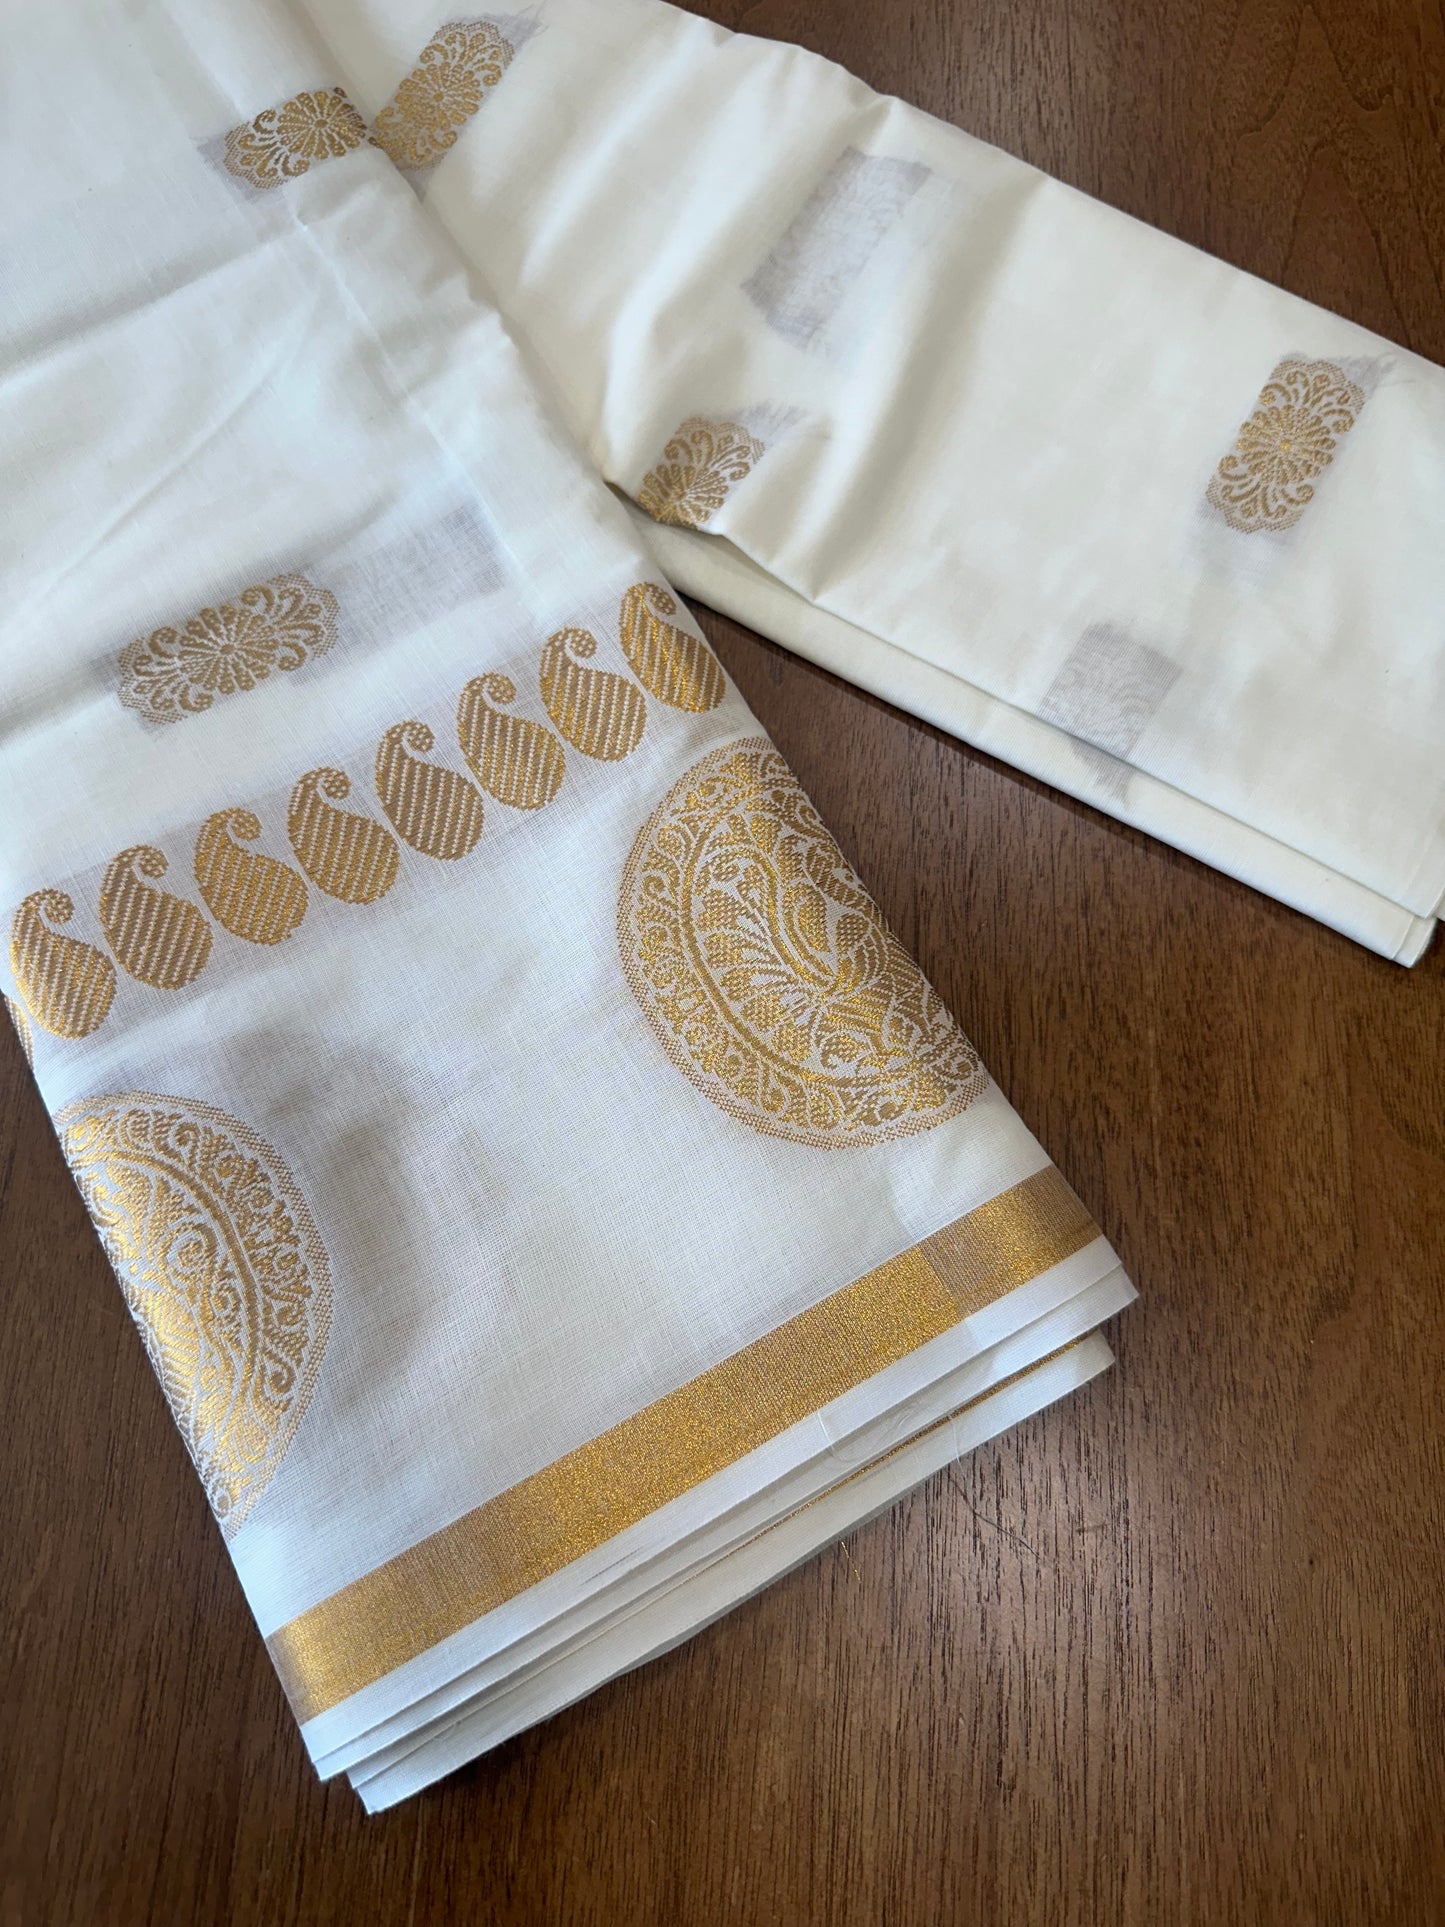 Kerala Cotton Skirt Material with Kasavu Woven Patterns (4 meters)